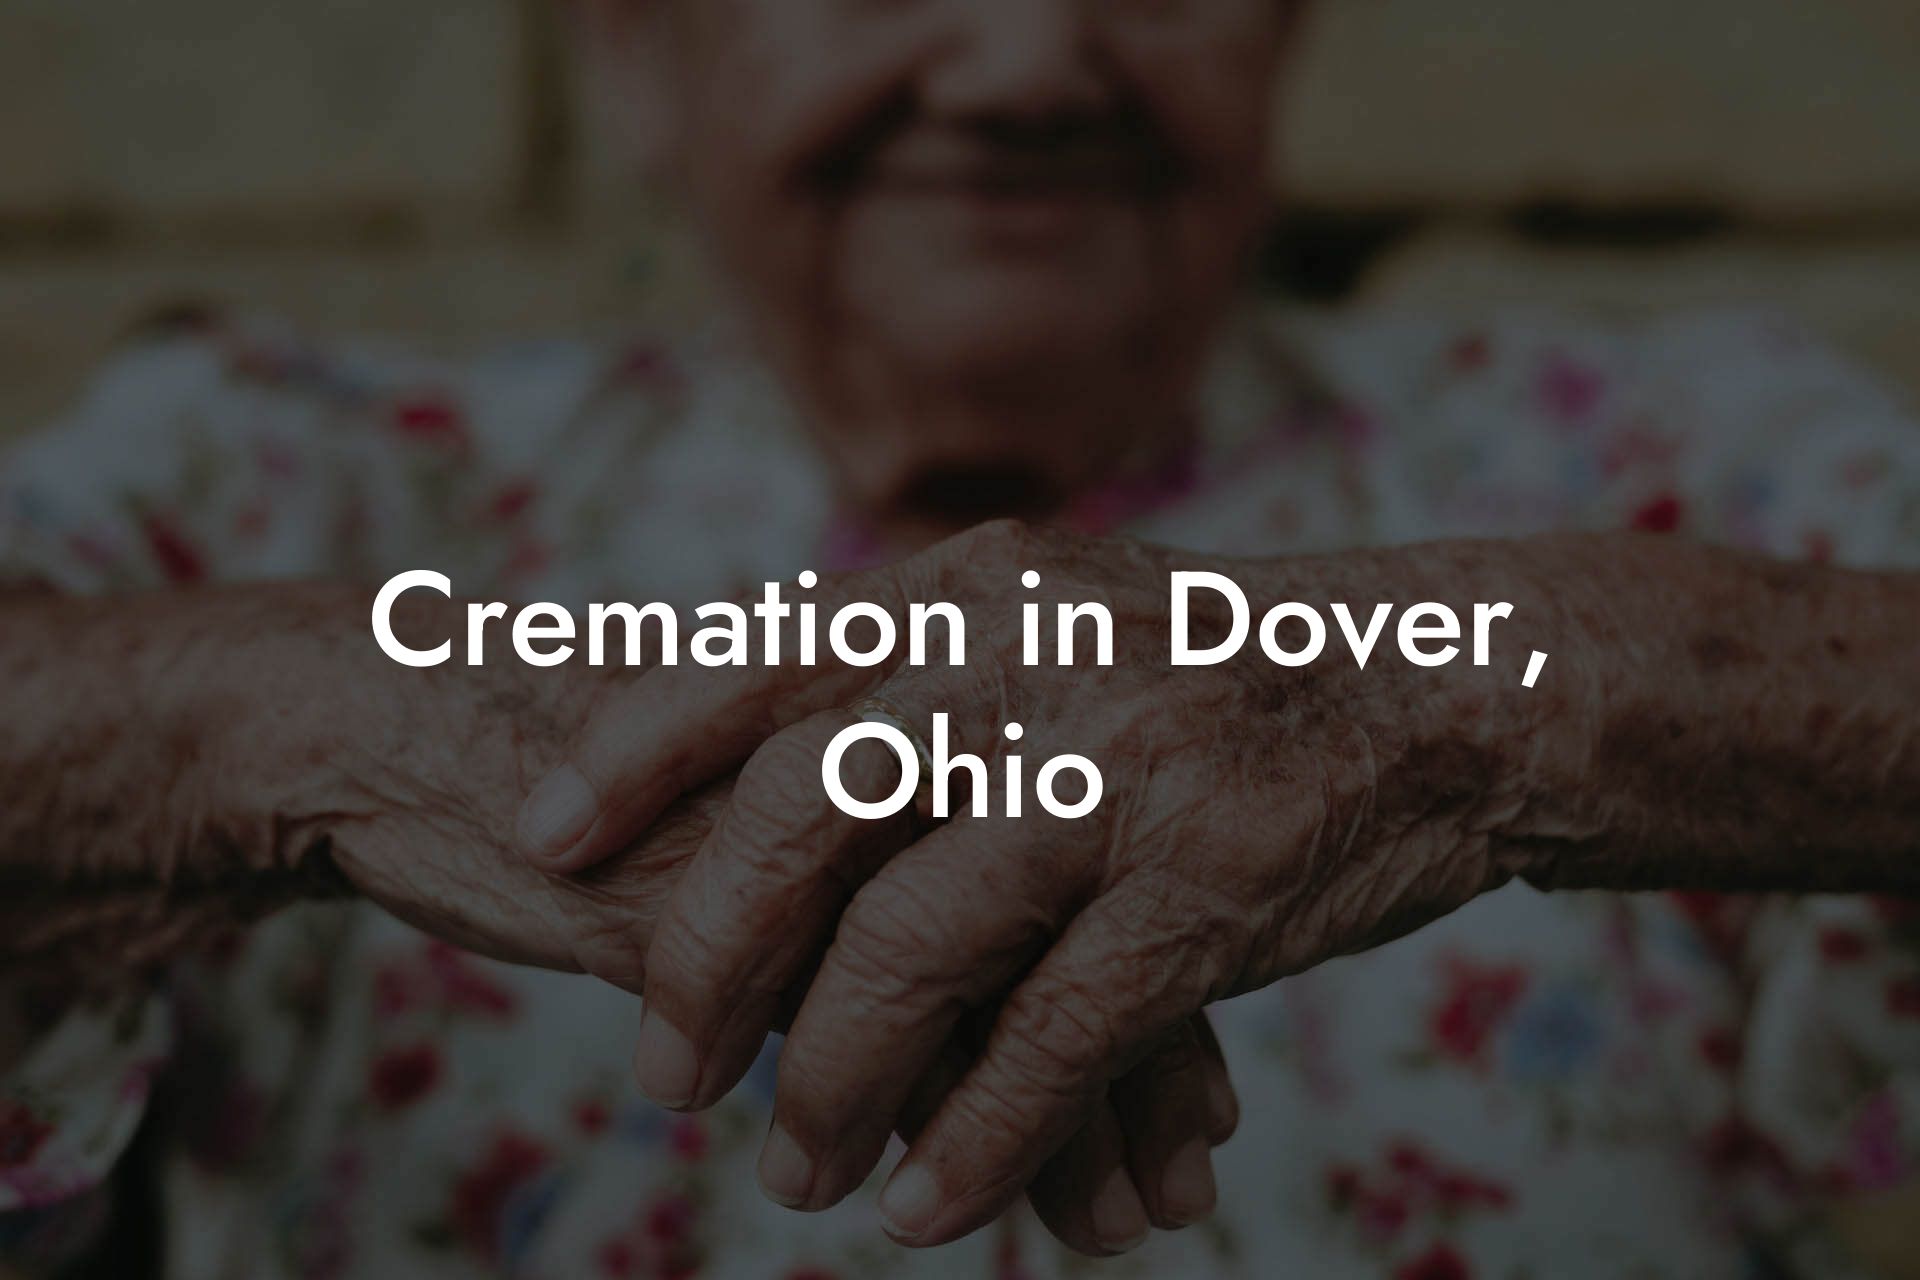 Cremation in Dover, Ohio